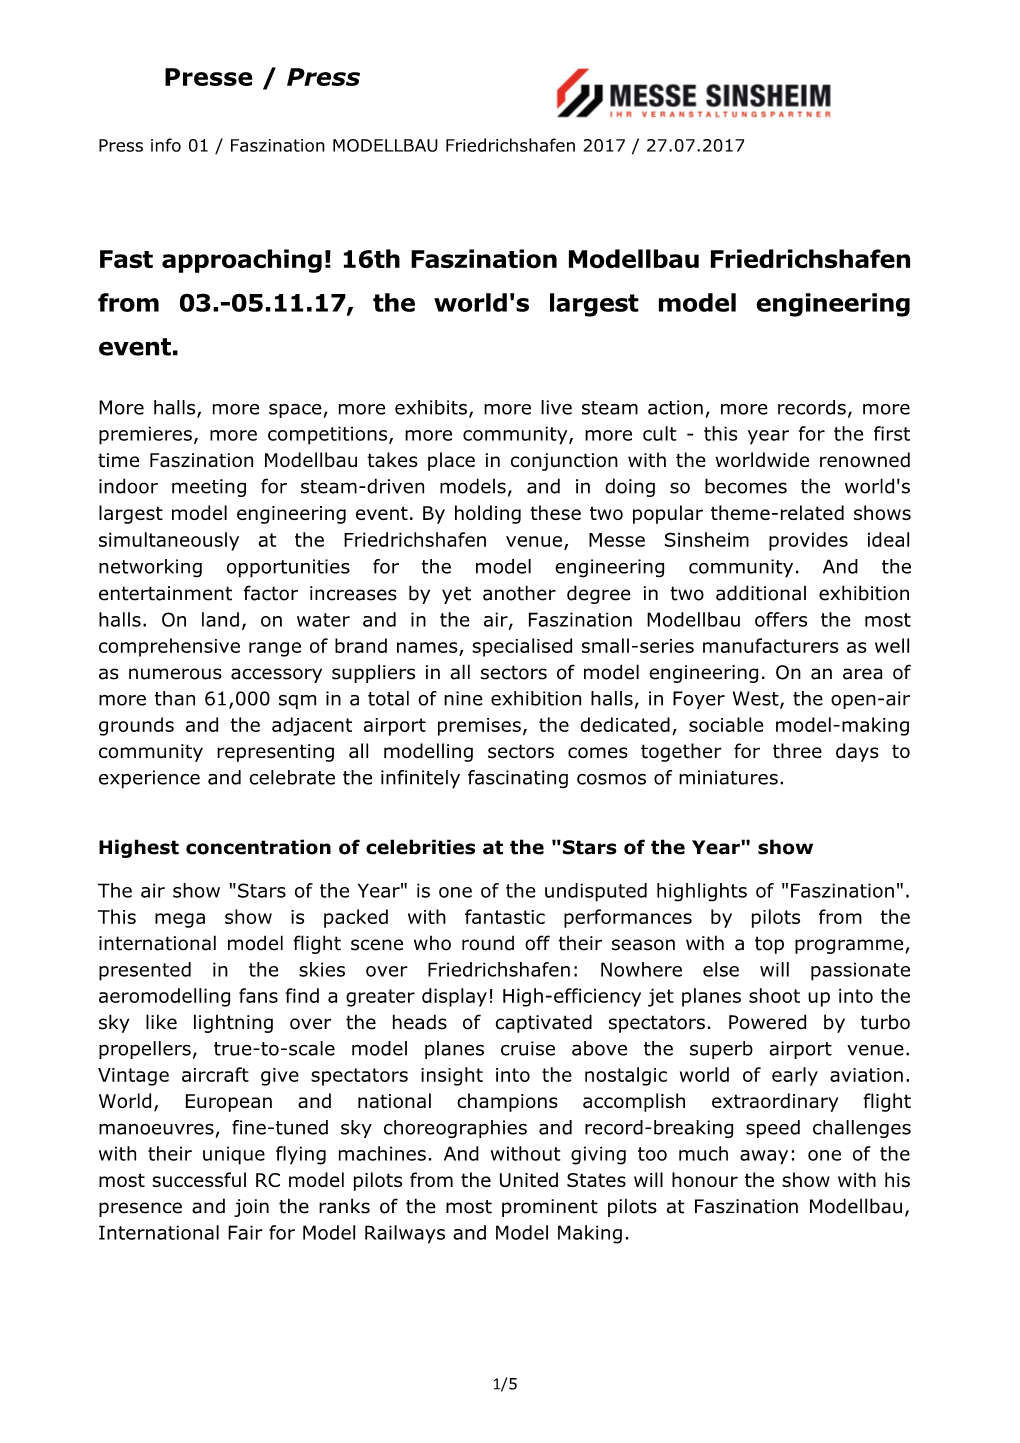 Fast Approaching! 16Thfaszination Modellbau Friedrichshafenfrom 03.-05.11.17, the World's